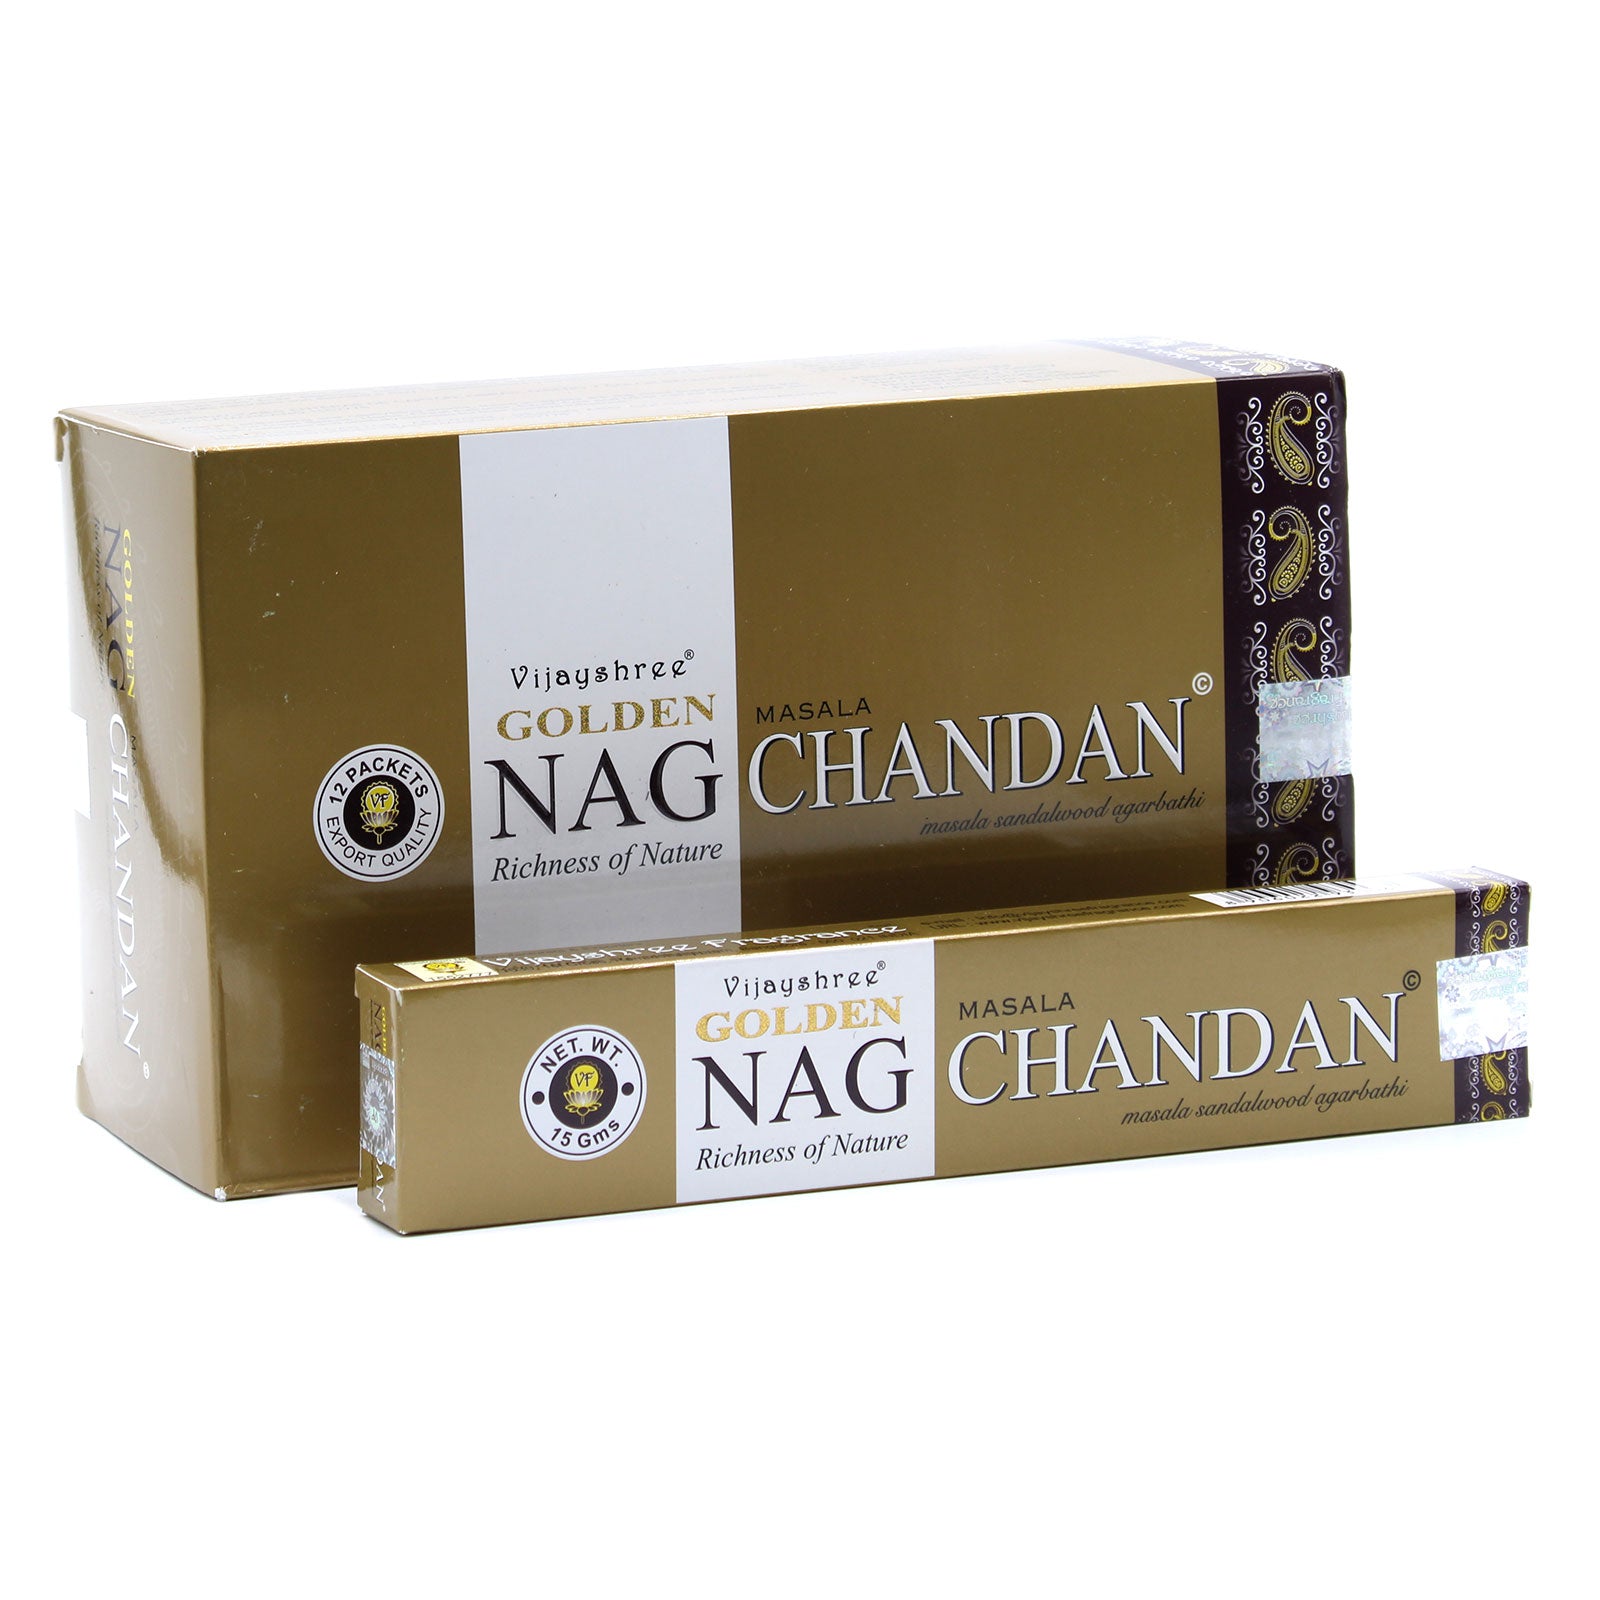 View 15g Golden Nag Chandan Incense information